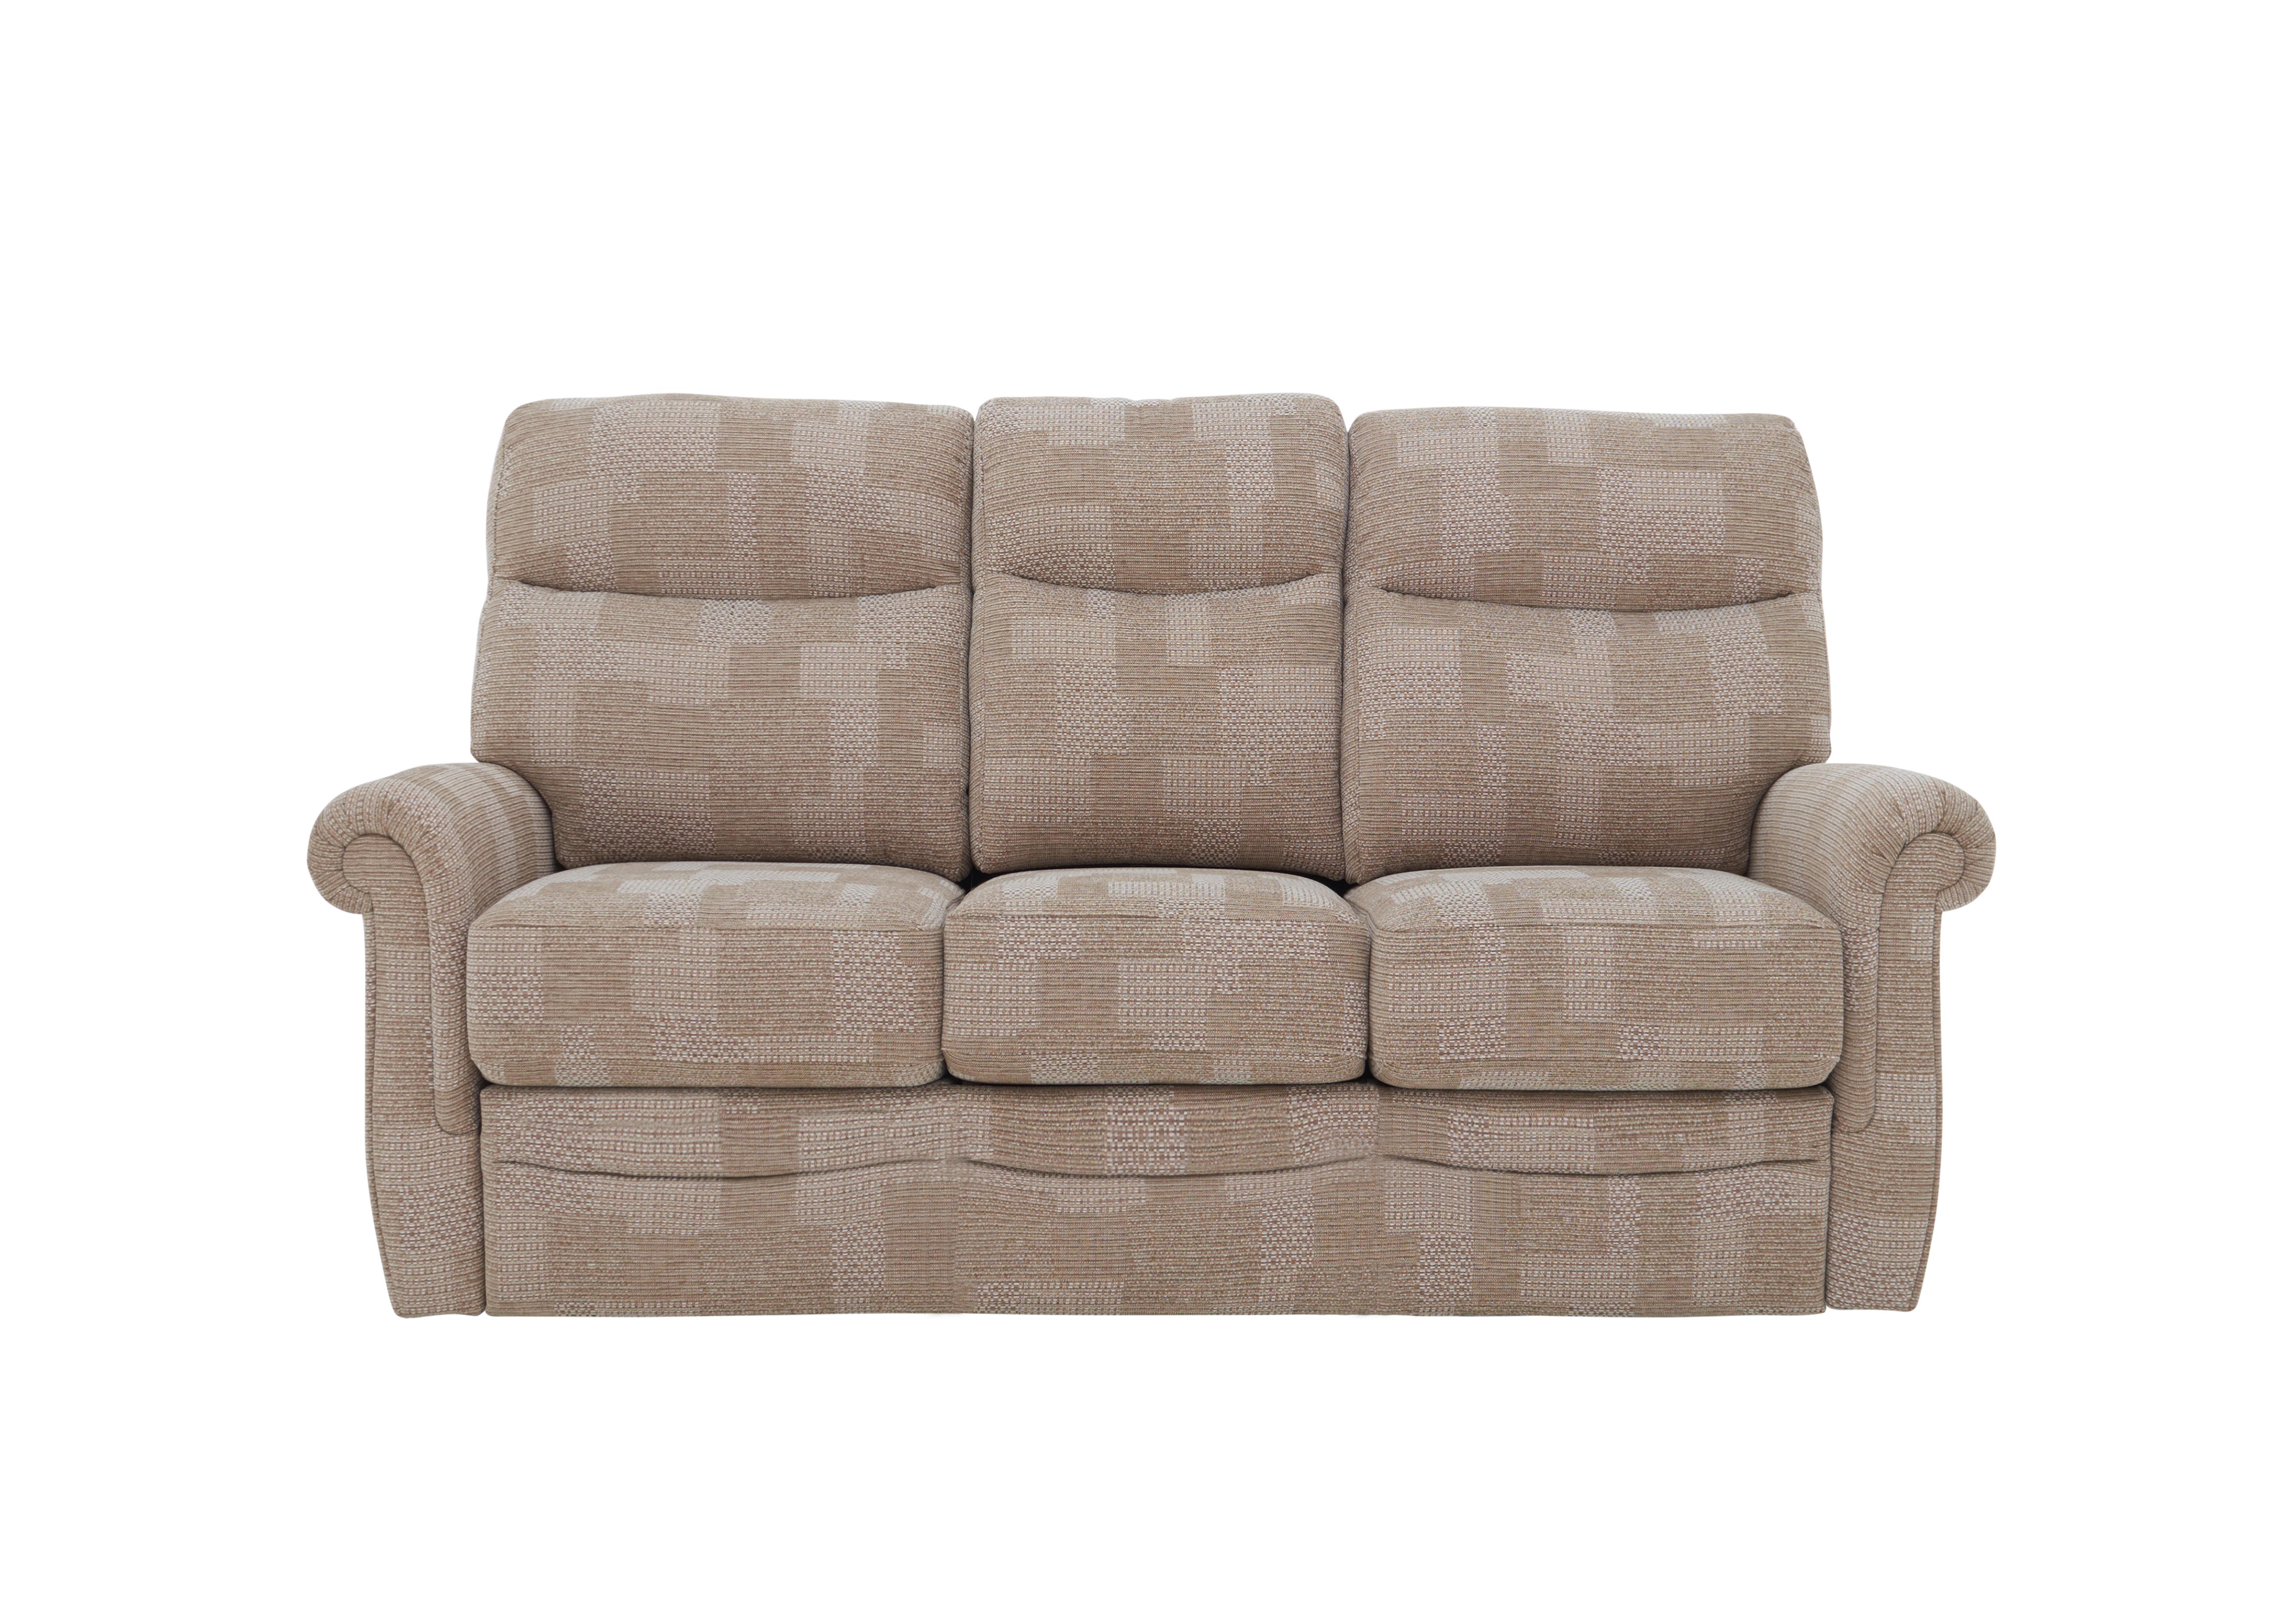 Avon Small 3 Seater Fabric Sofa in A800 Faro Sand on Furniture Village